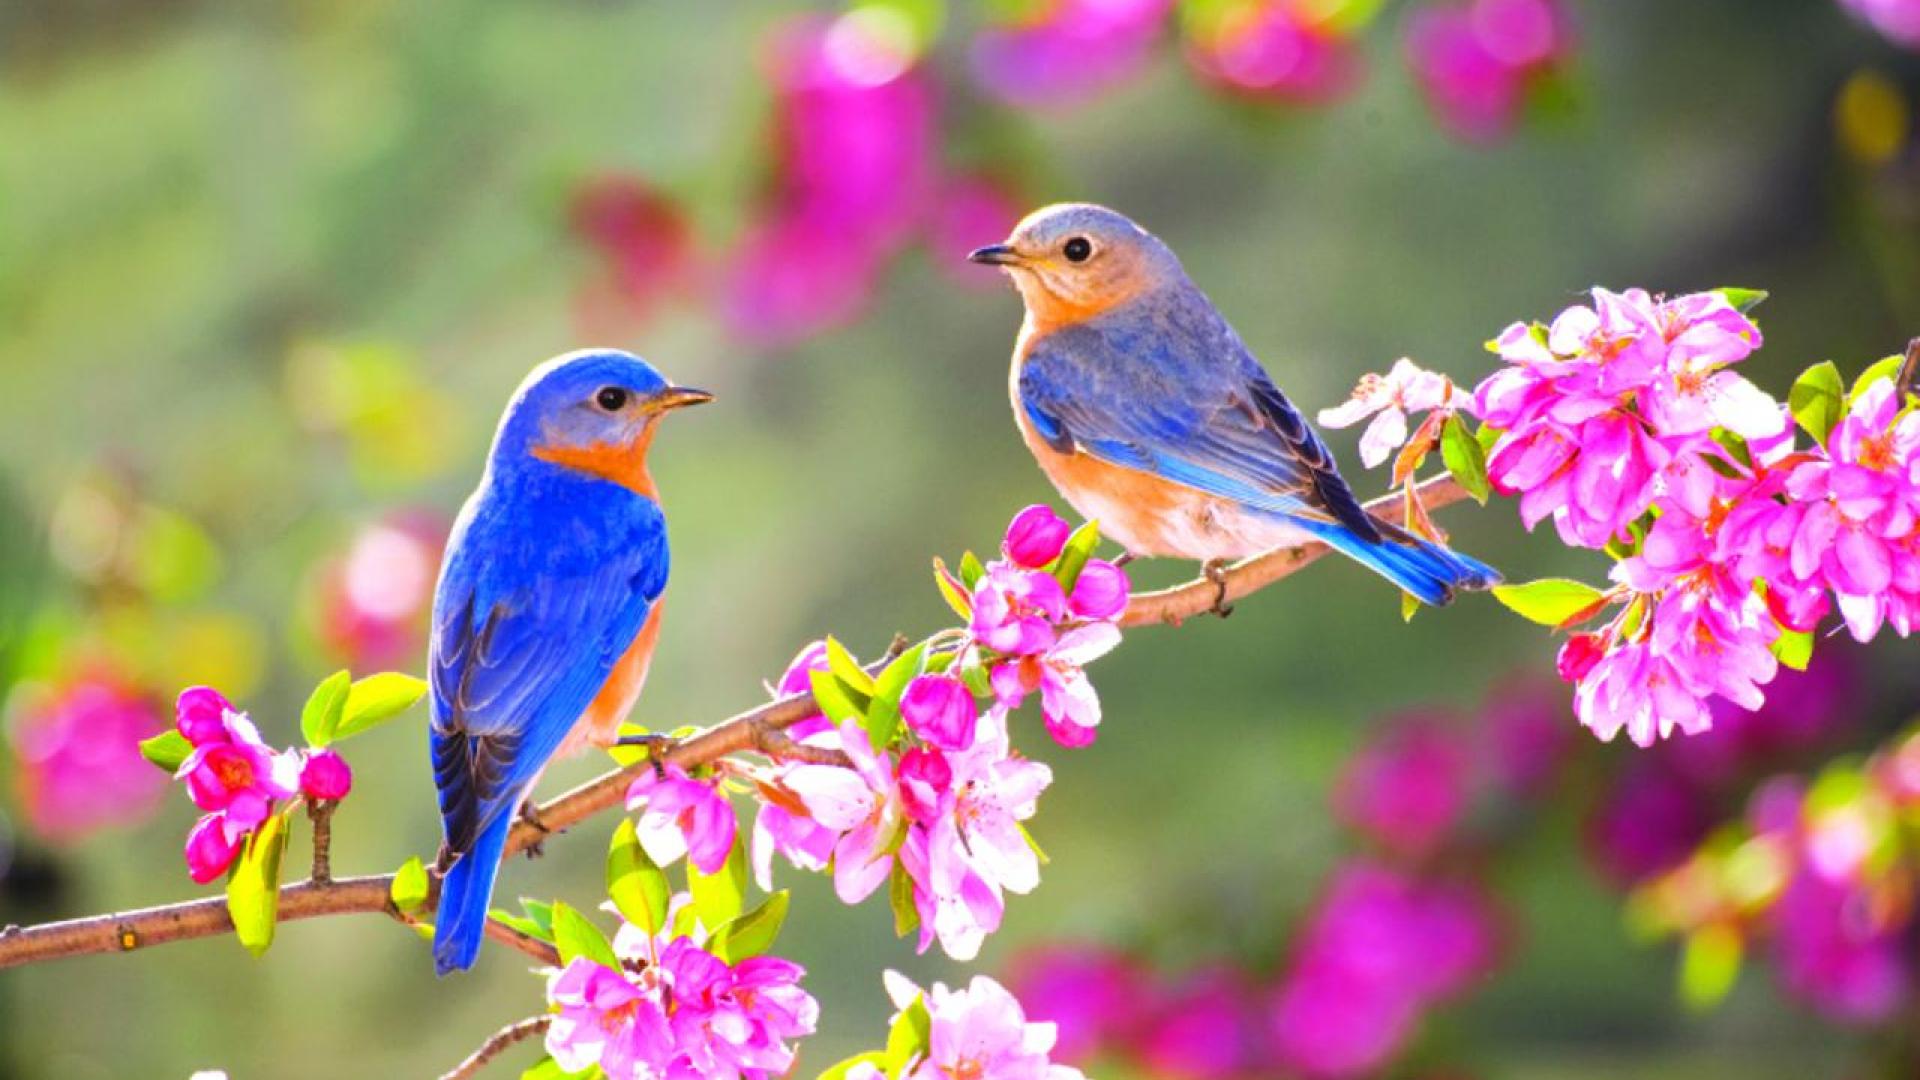 SPRING BLUE BIRDS WALLPAPER   148833   HD Wallpapers